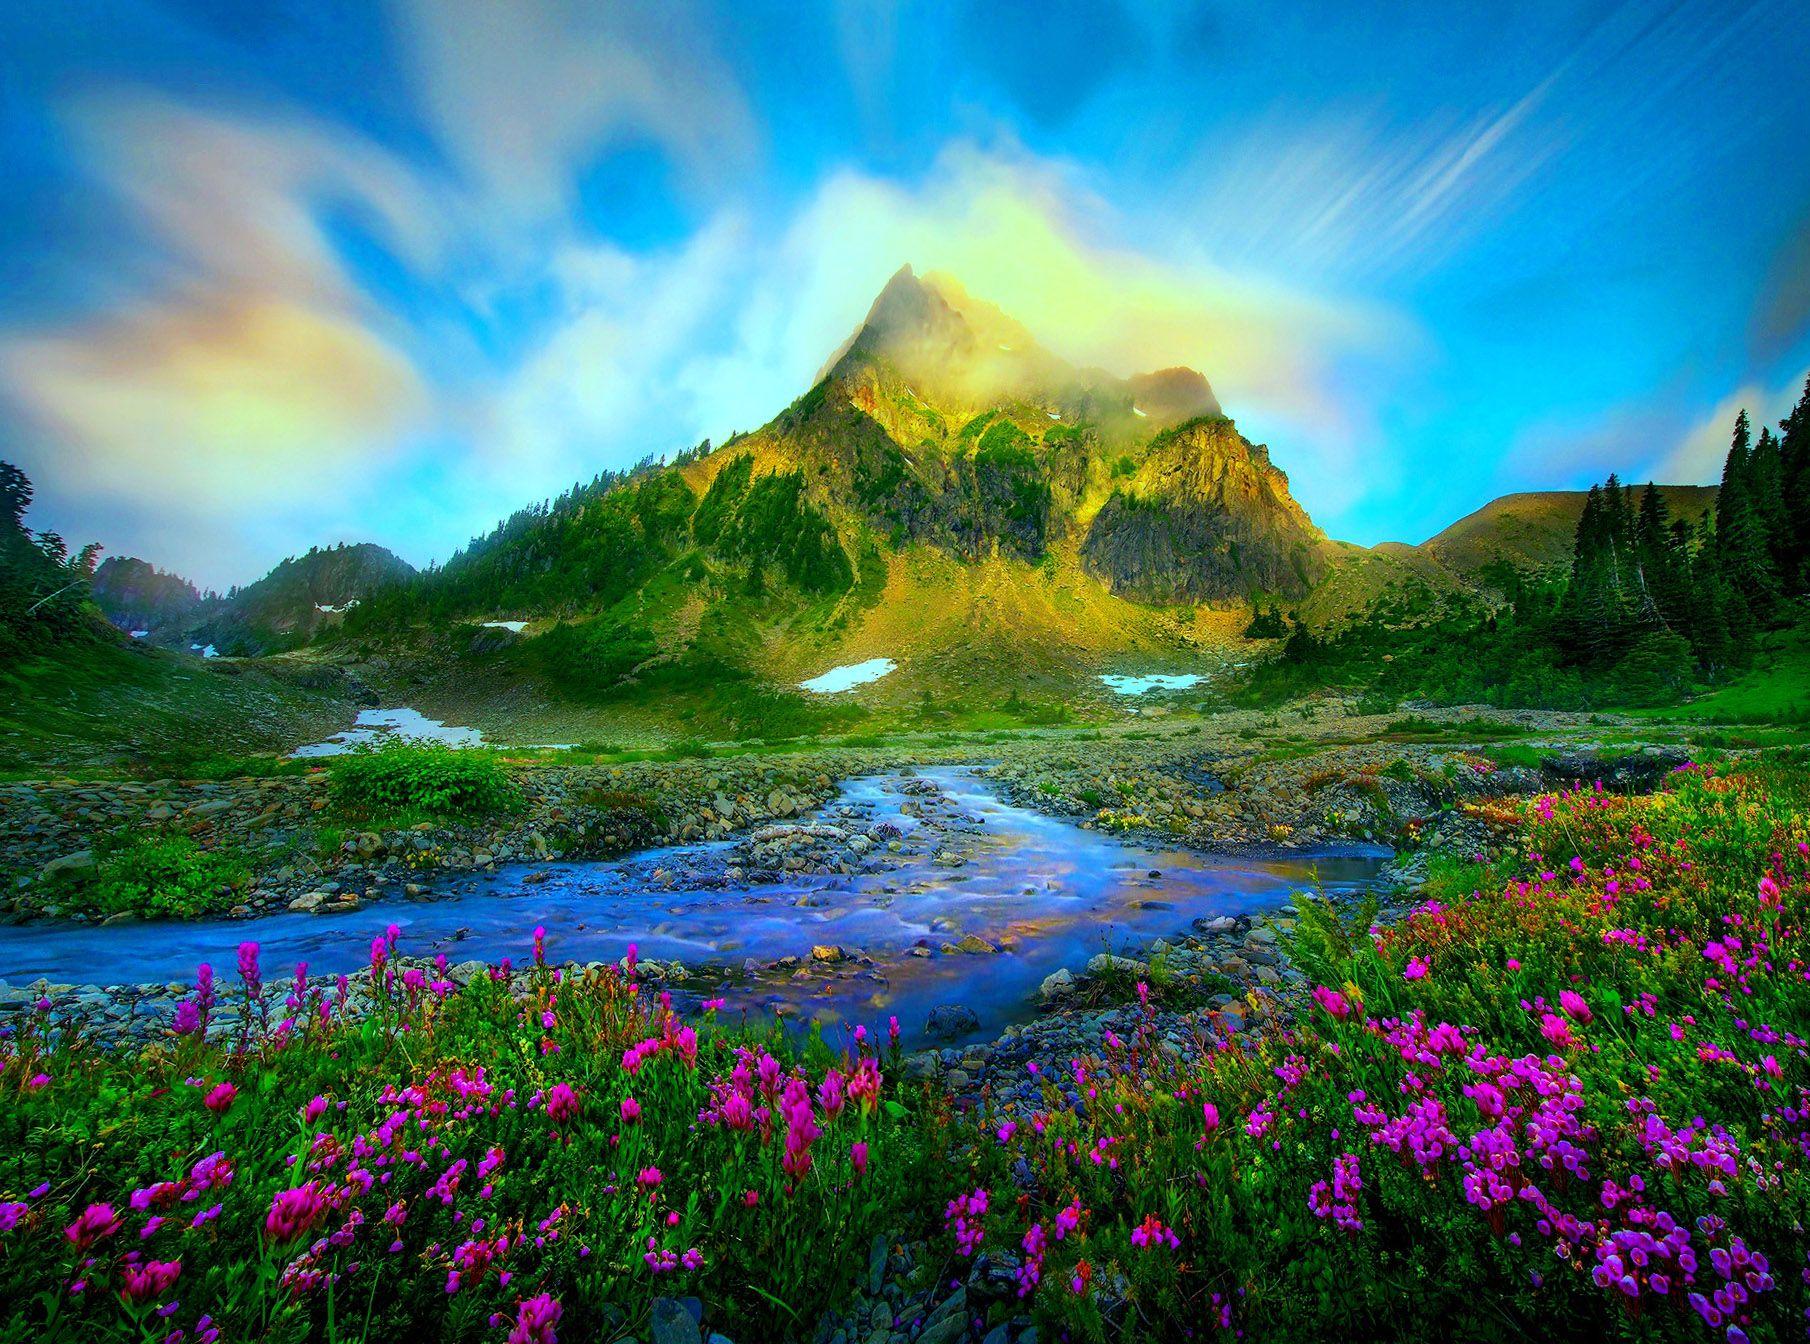 Widescreen Nature HD Landscape Image Of On Desktop Wallpaper High